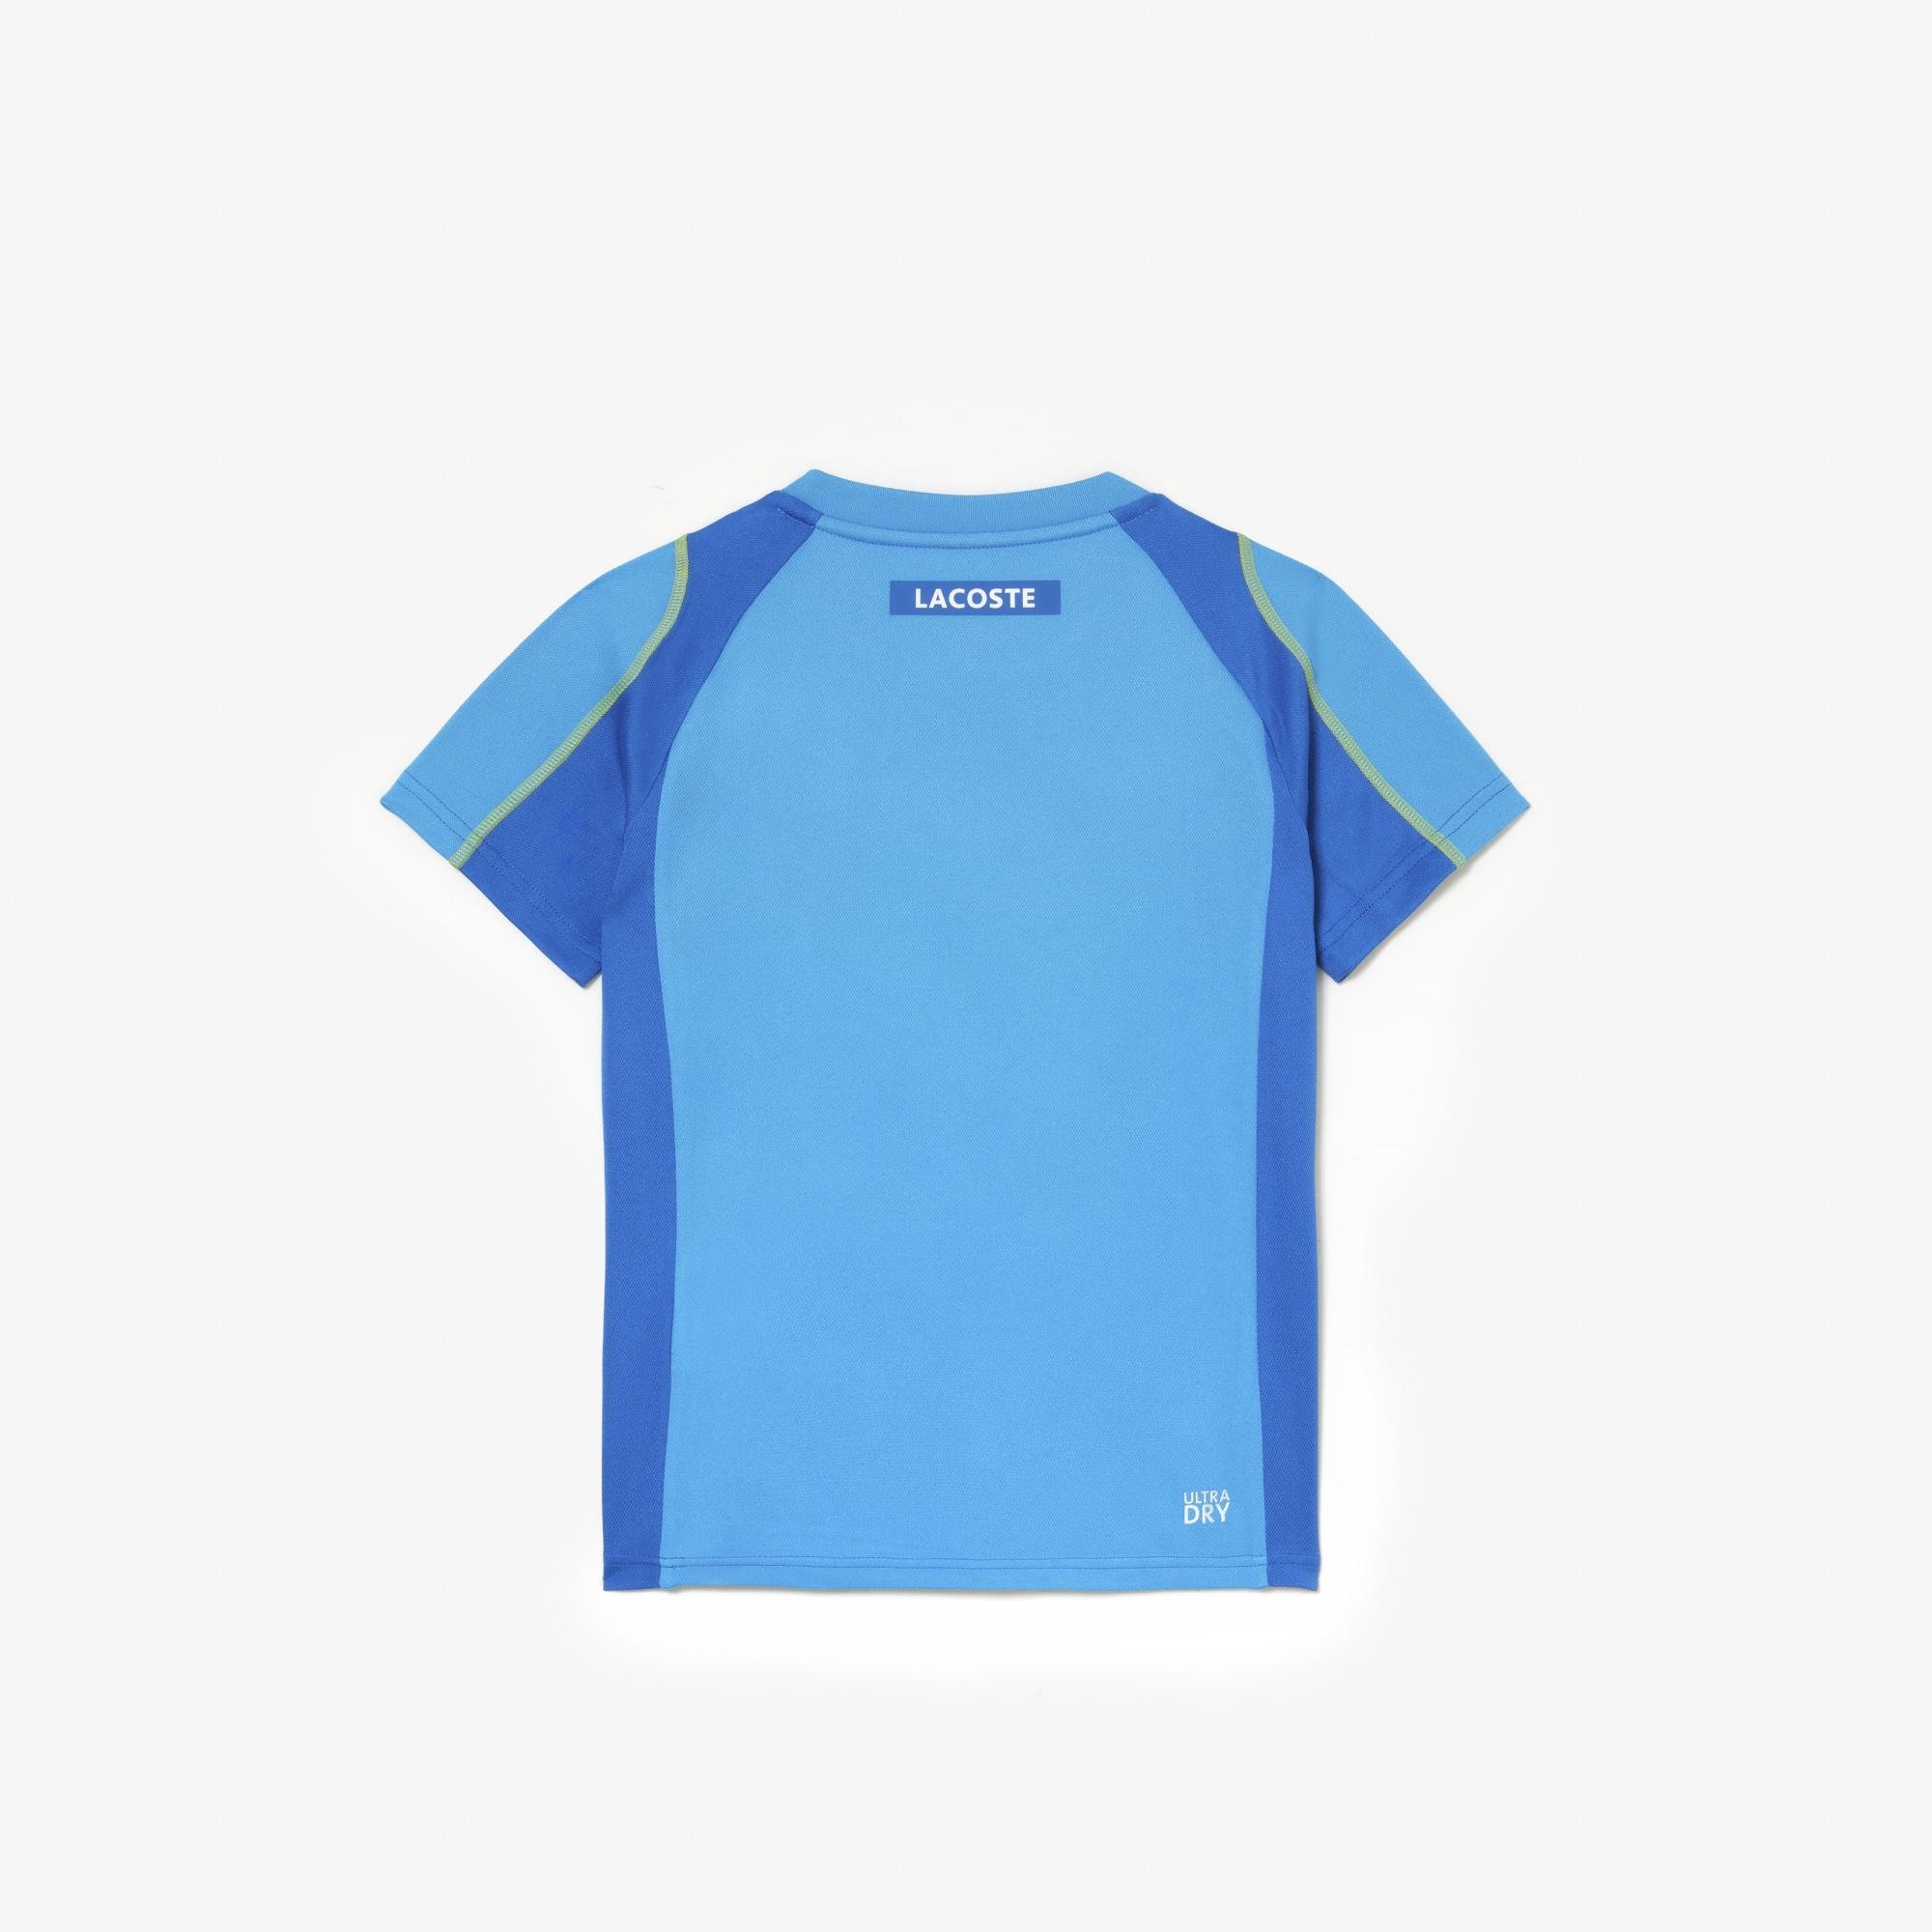 Lacoste Erkek Çocuk Renk Bloklu Mavi T-Shirt. 5